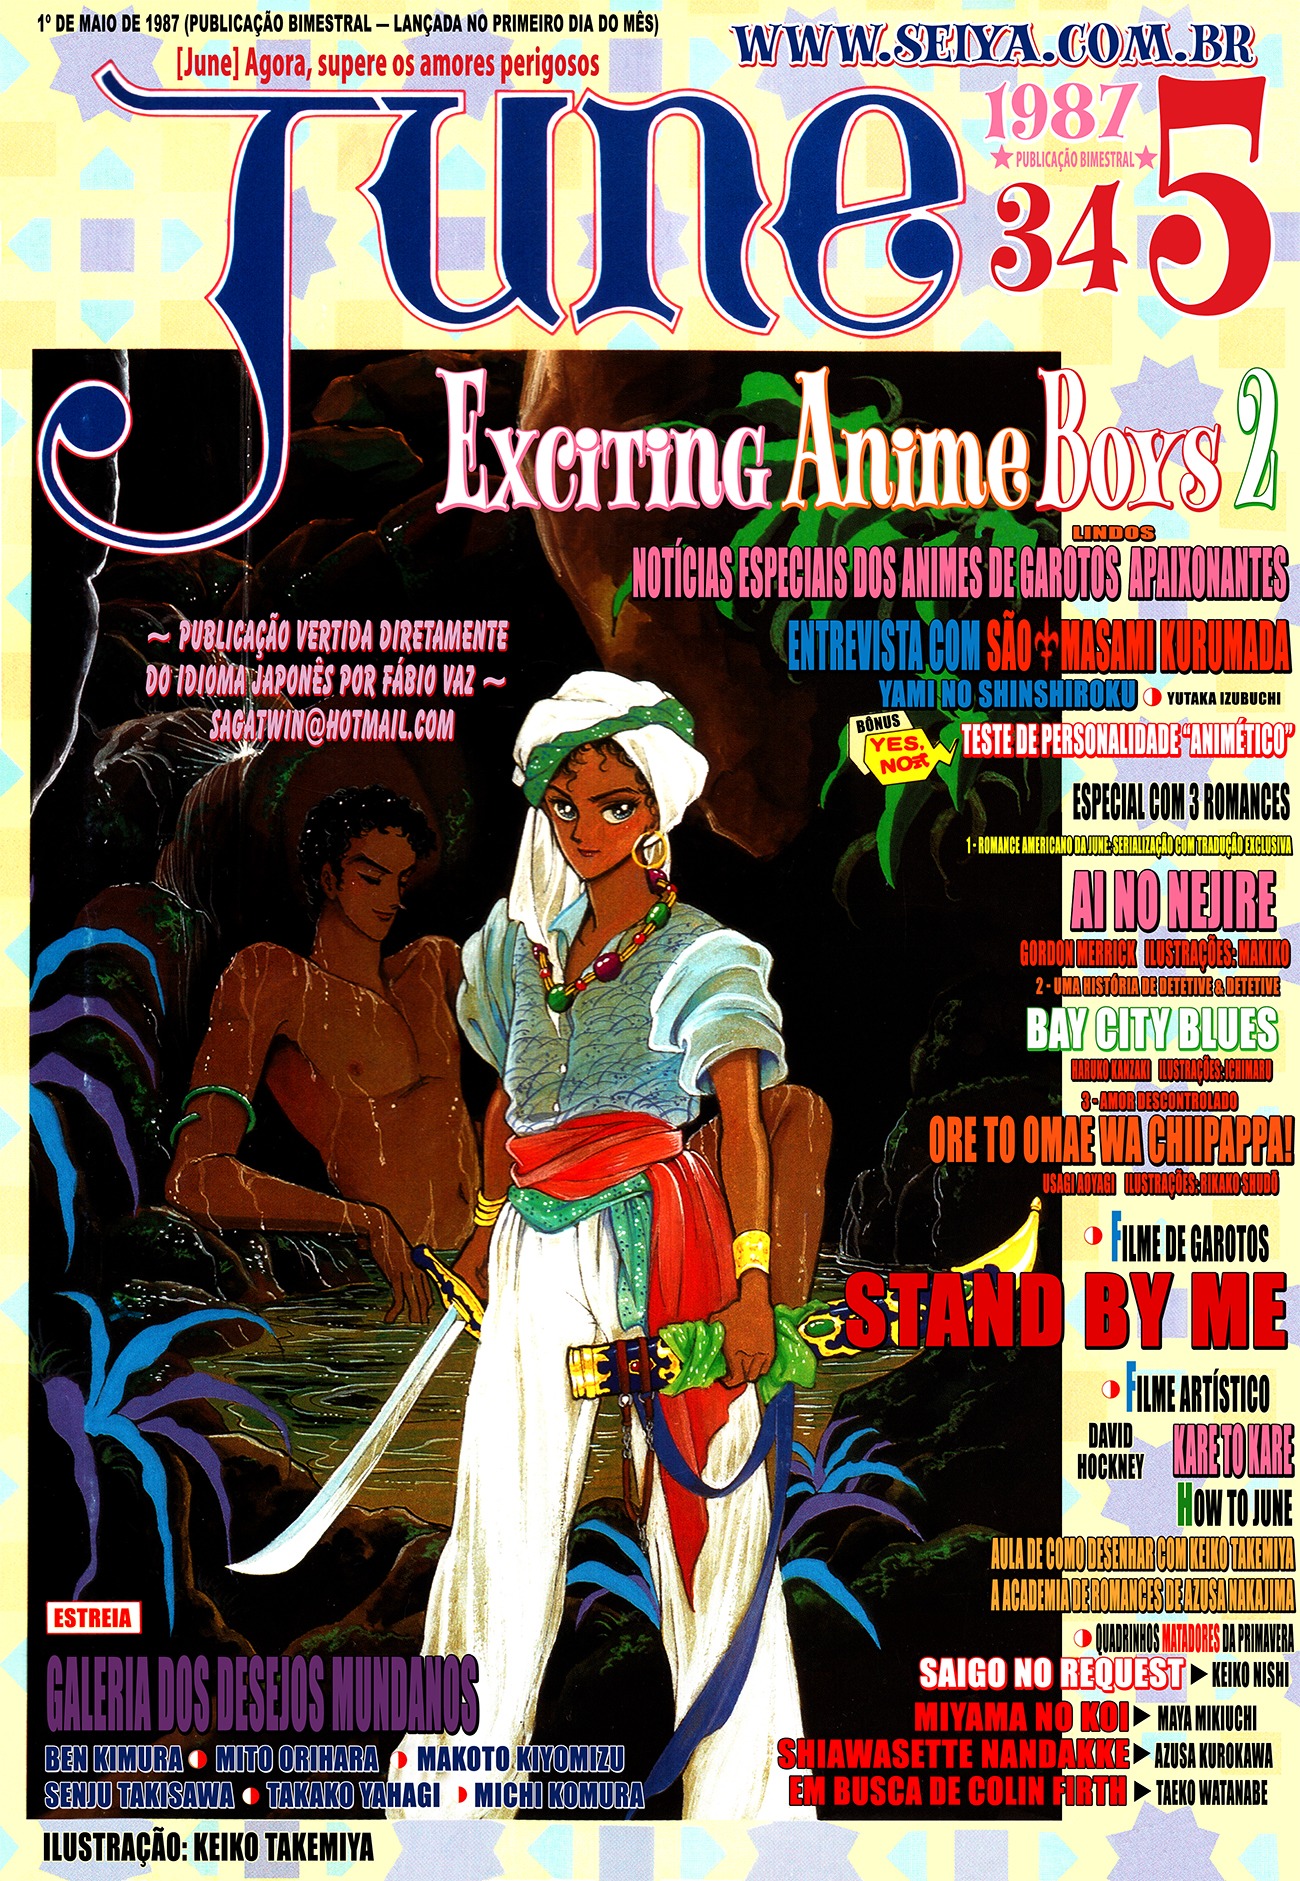 Calaméo - Revista&Guia, 55ª Edição, Jun&Jul